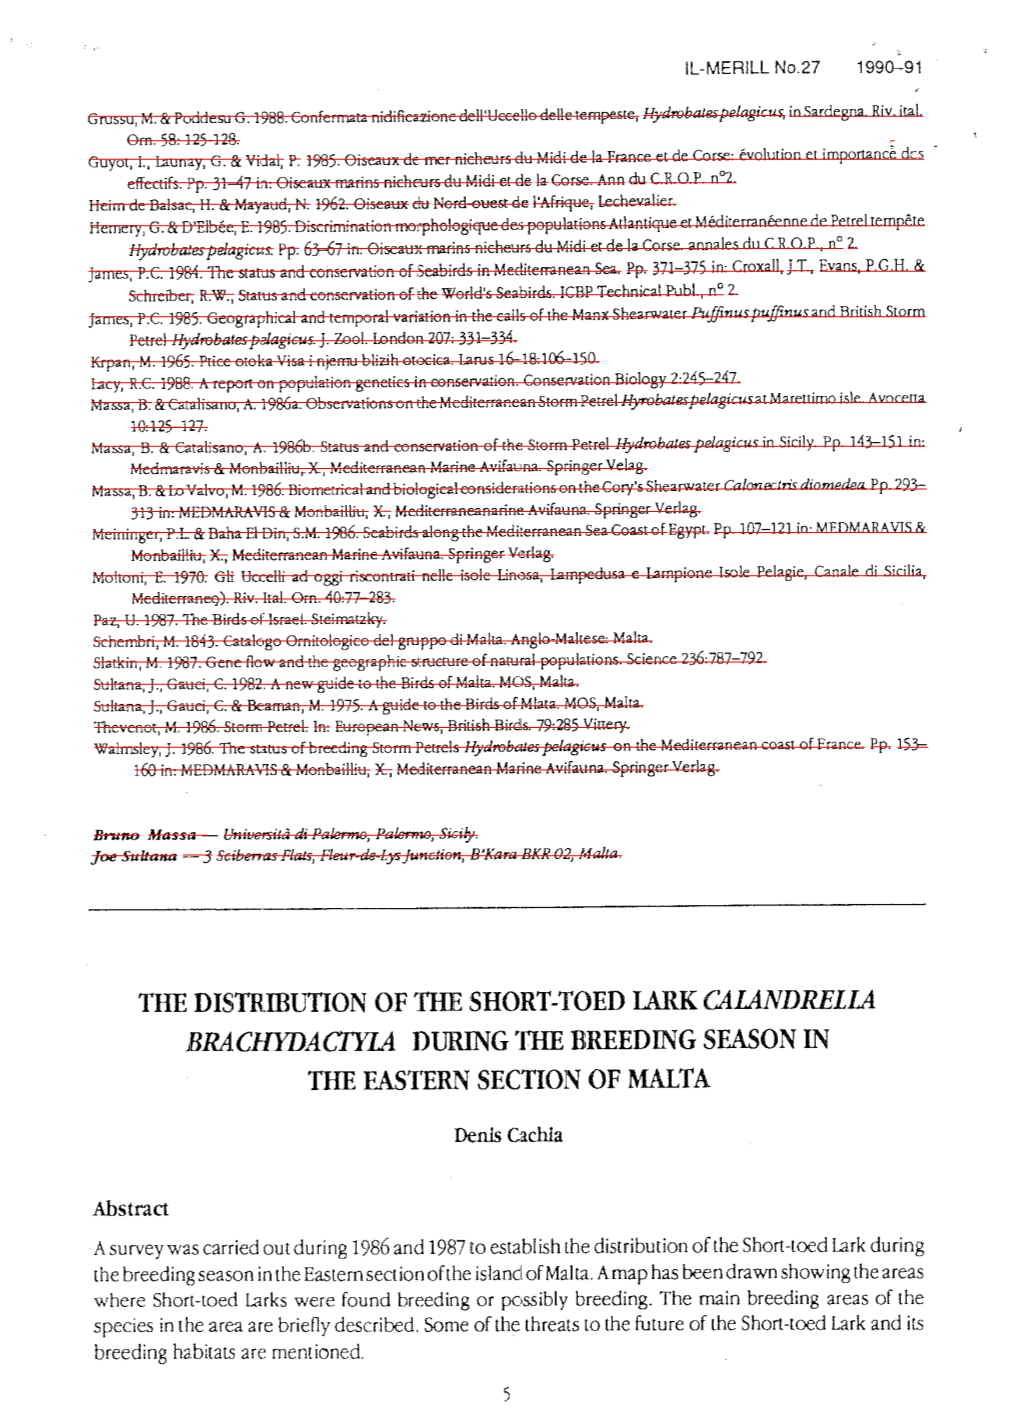 The Distribution of the Short-Toed Lark Calandrella Brachydactyla During